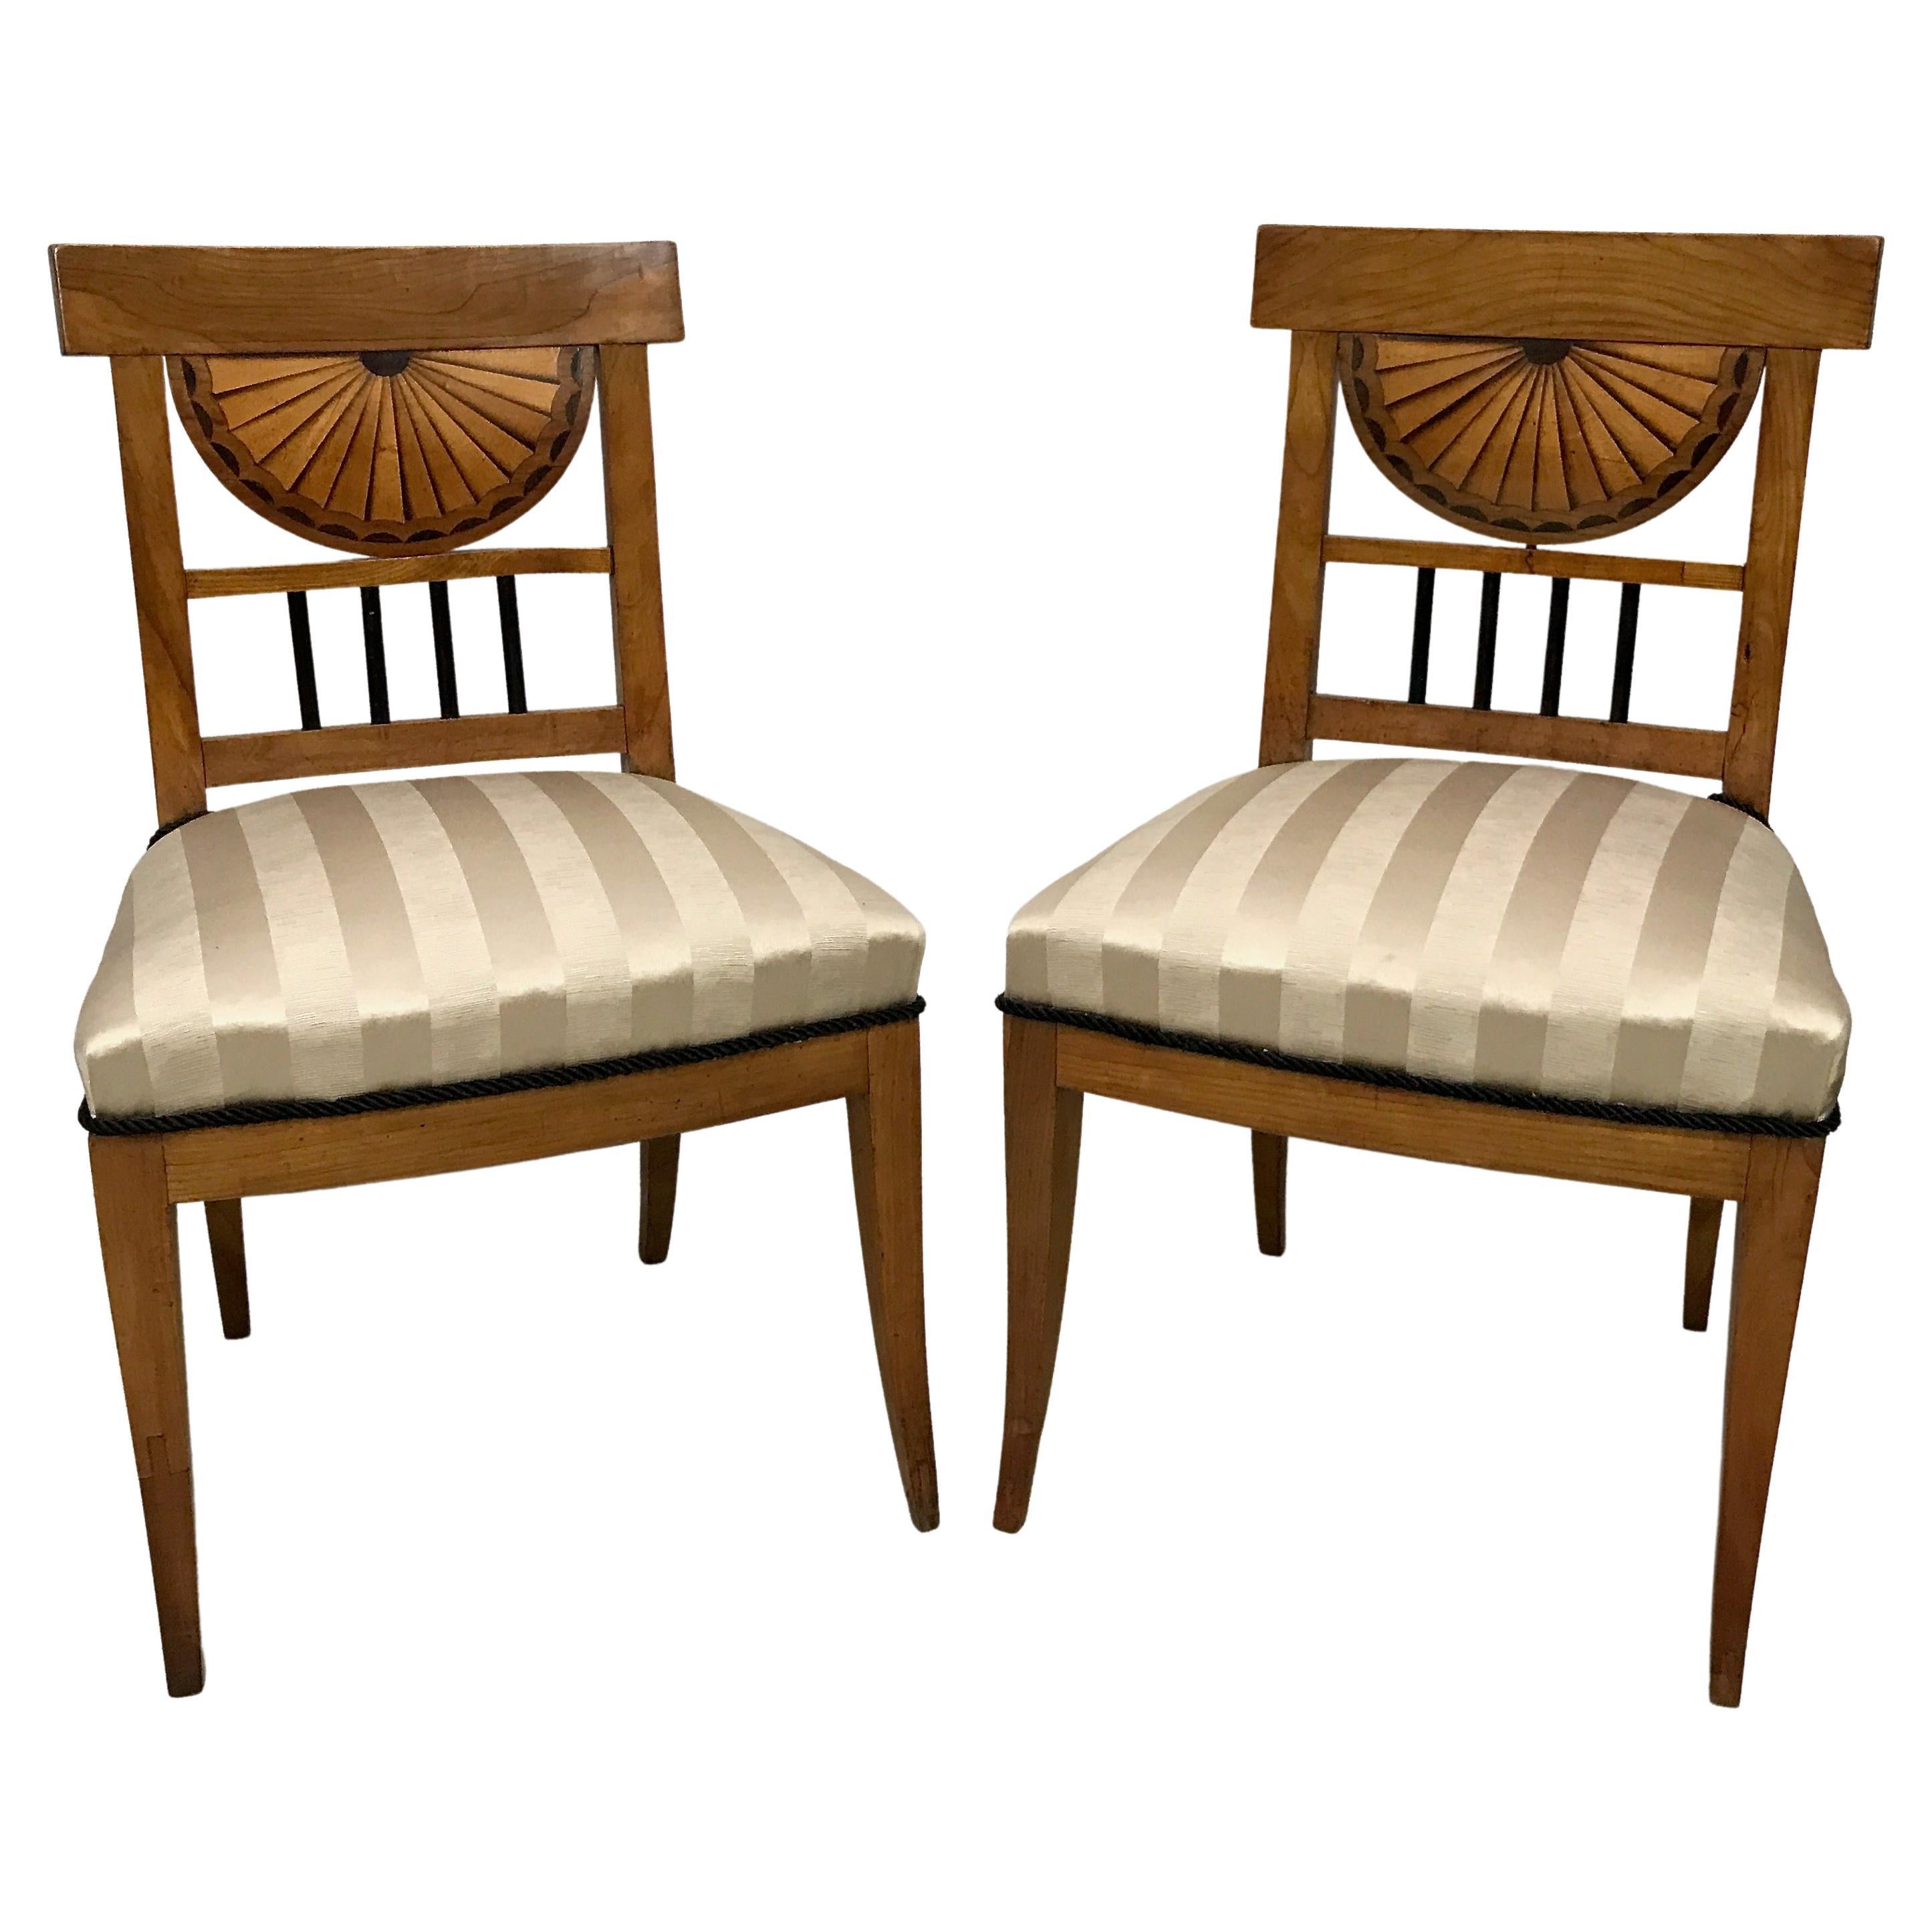 Pair of Cherrywood Biedermeier Side Chairs, European Early 19th Century For Sale